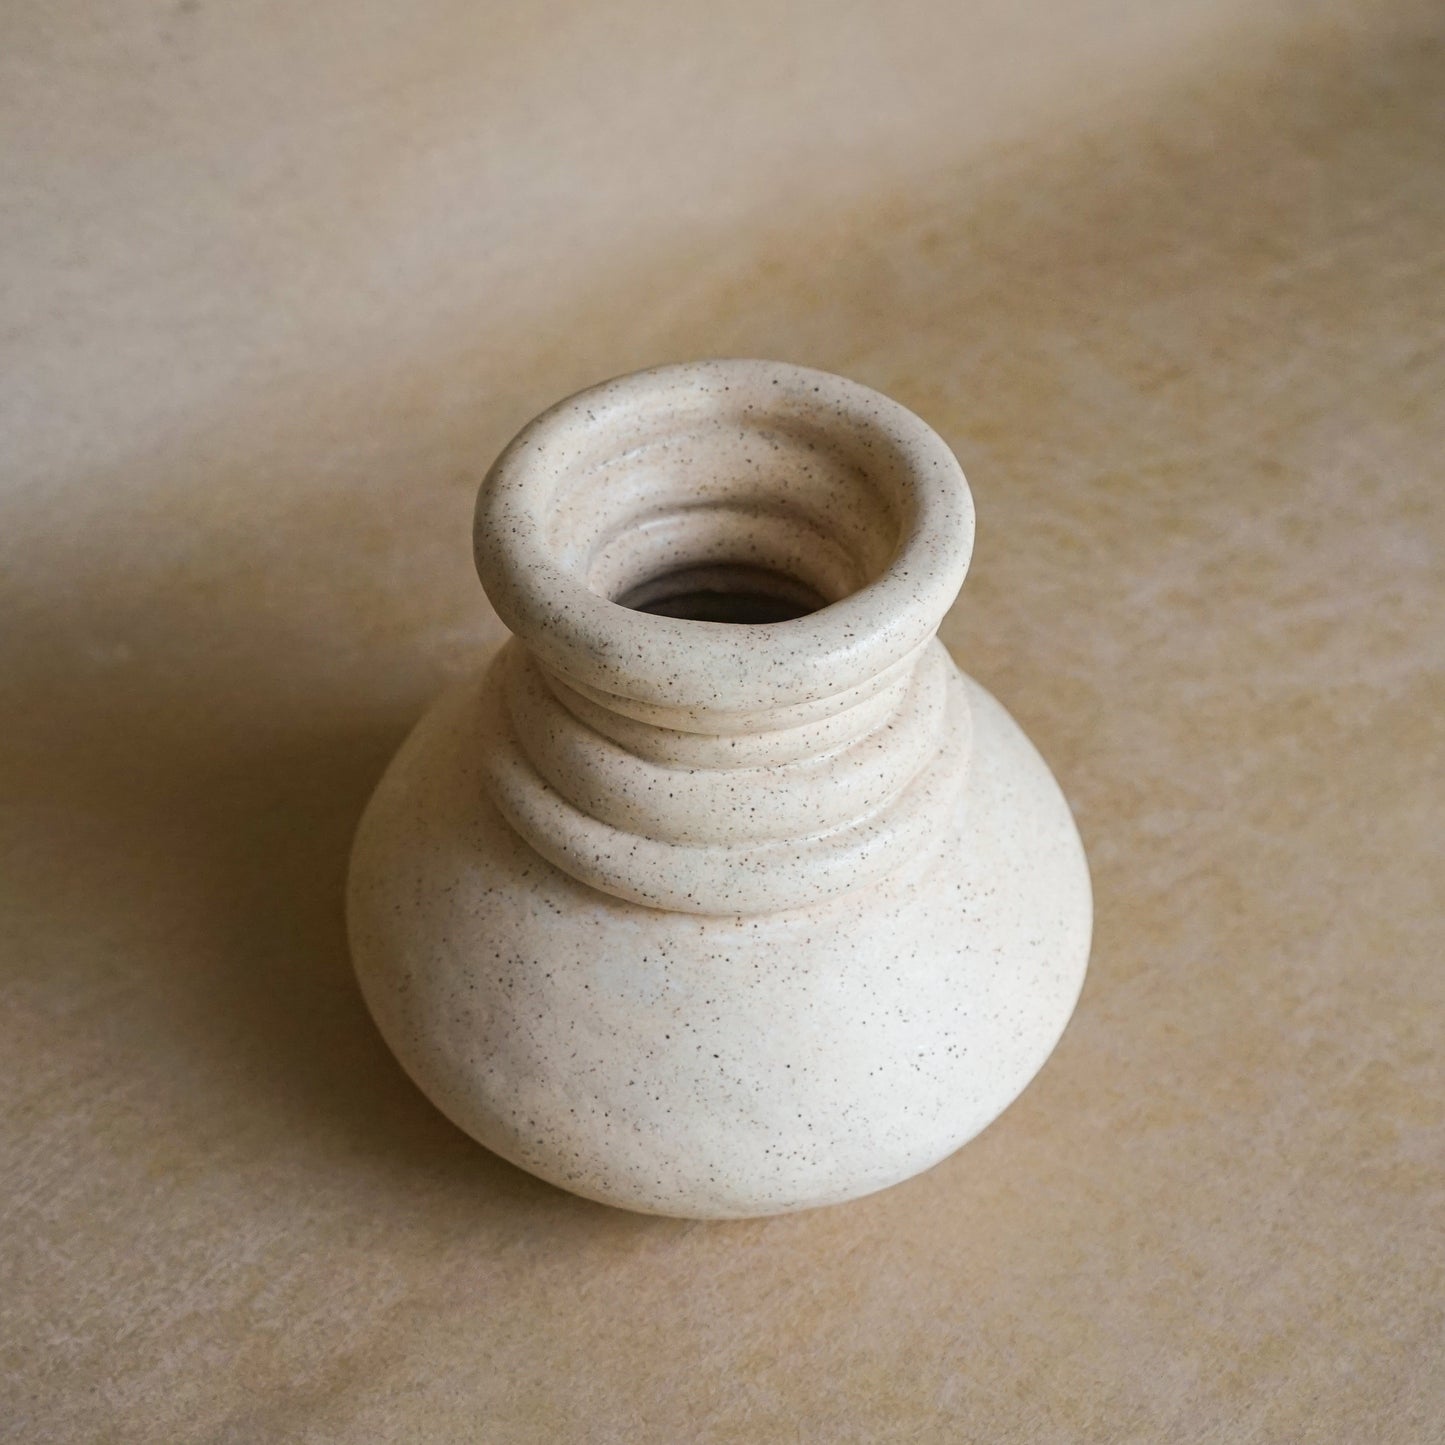 The Walnut Coil Vase